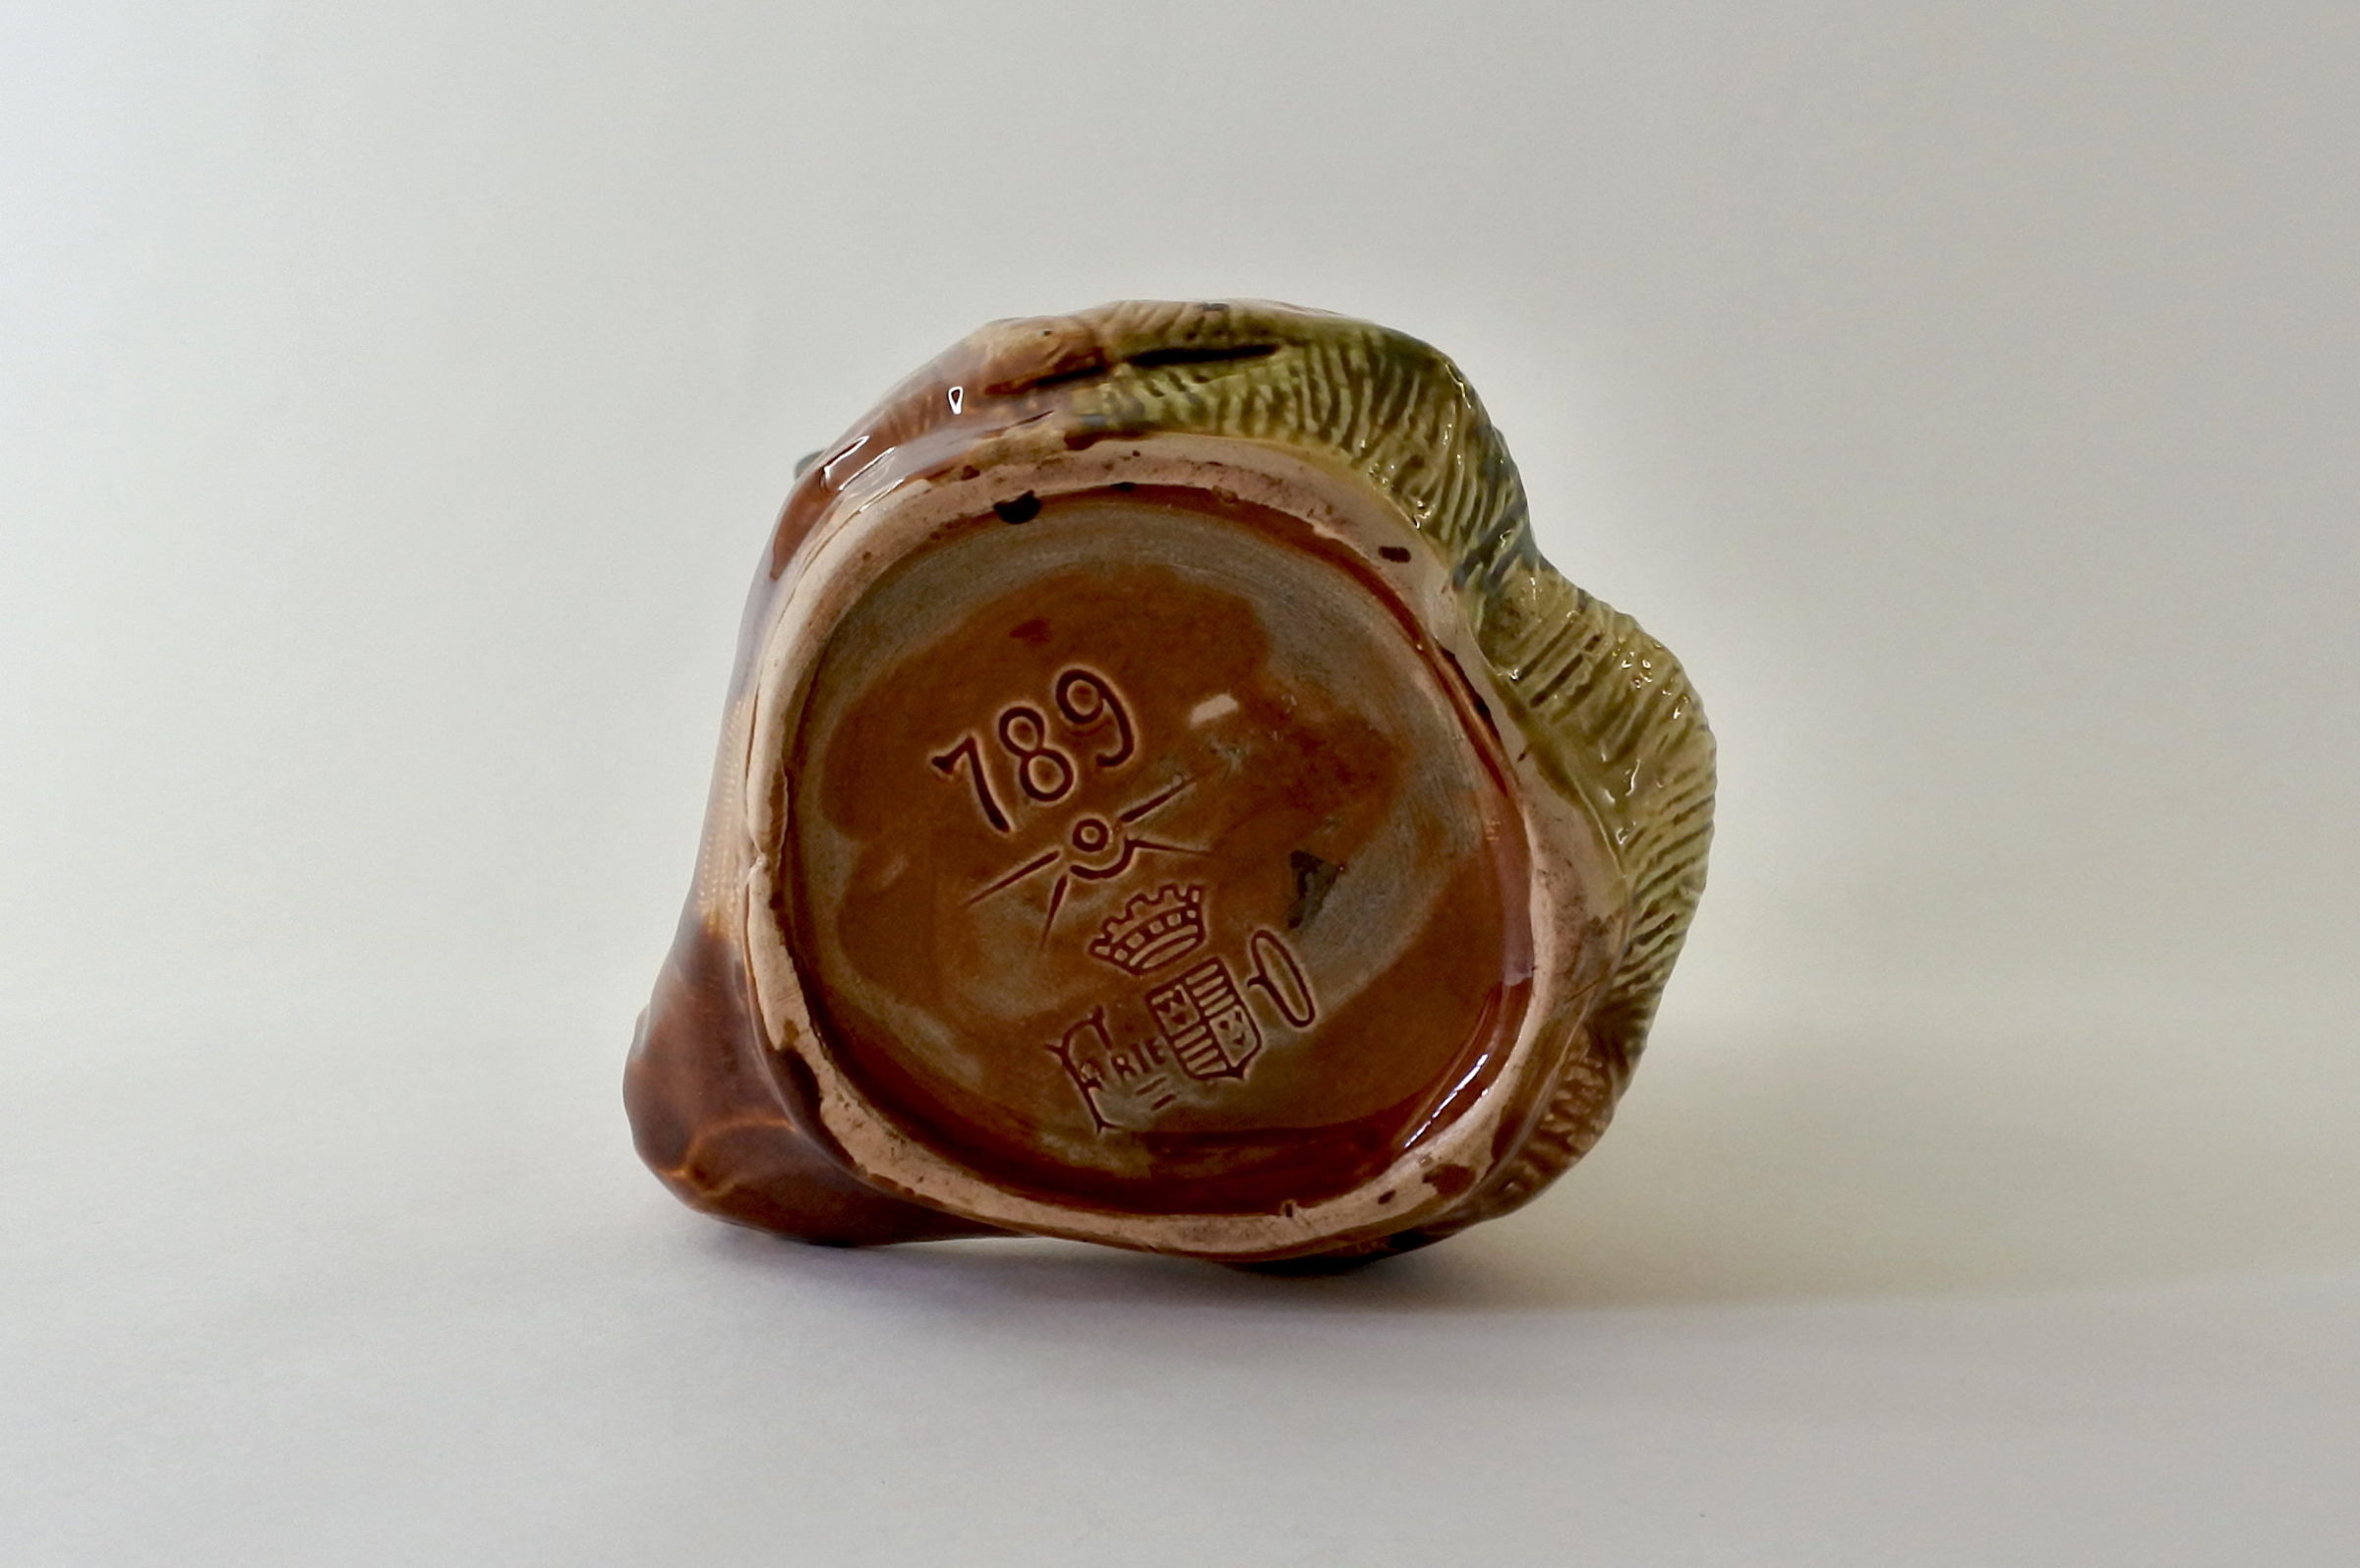 Brocca allegorica in ceramica barbotine - Marianne - 6